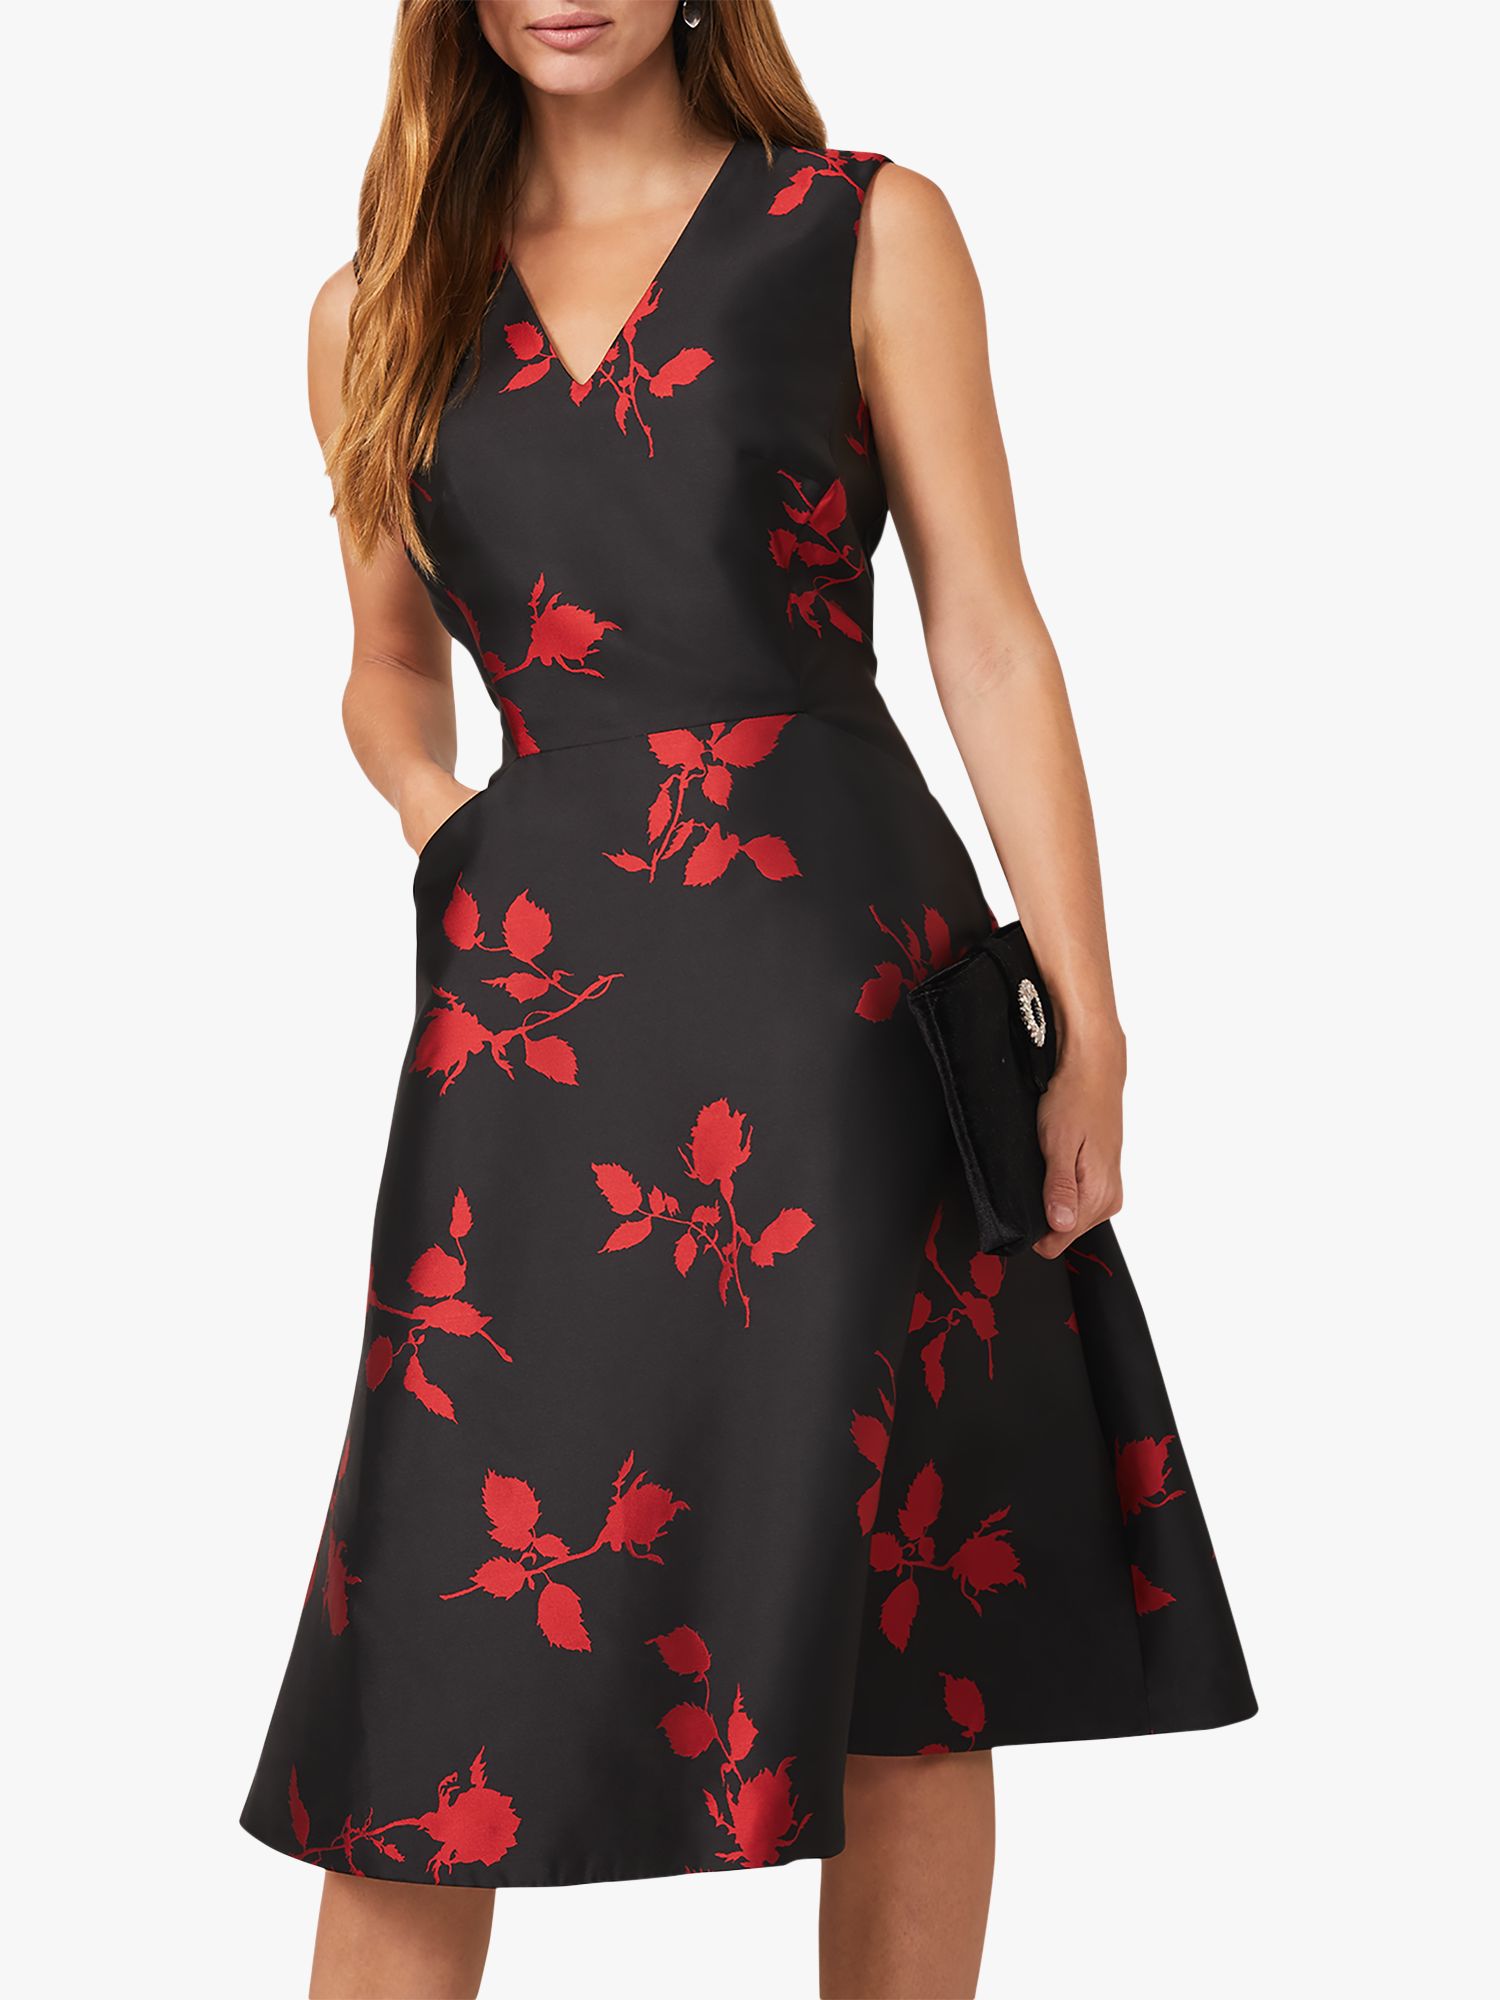 Phase Eight Jordyn Floral Flare Dress, Black/Red